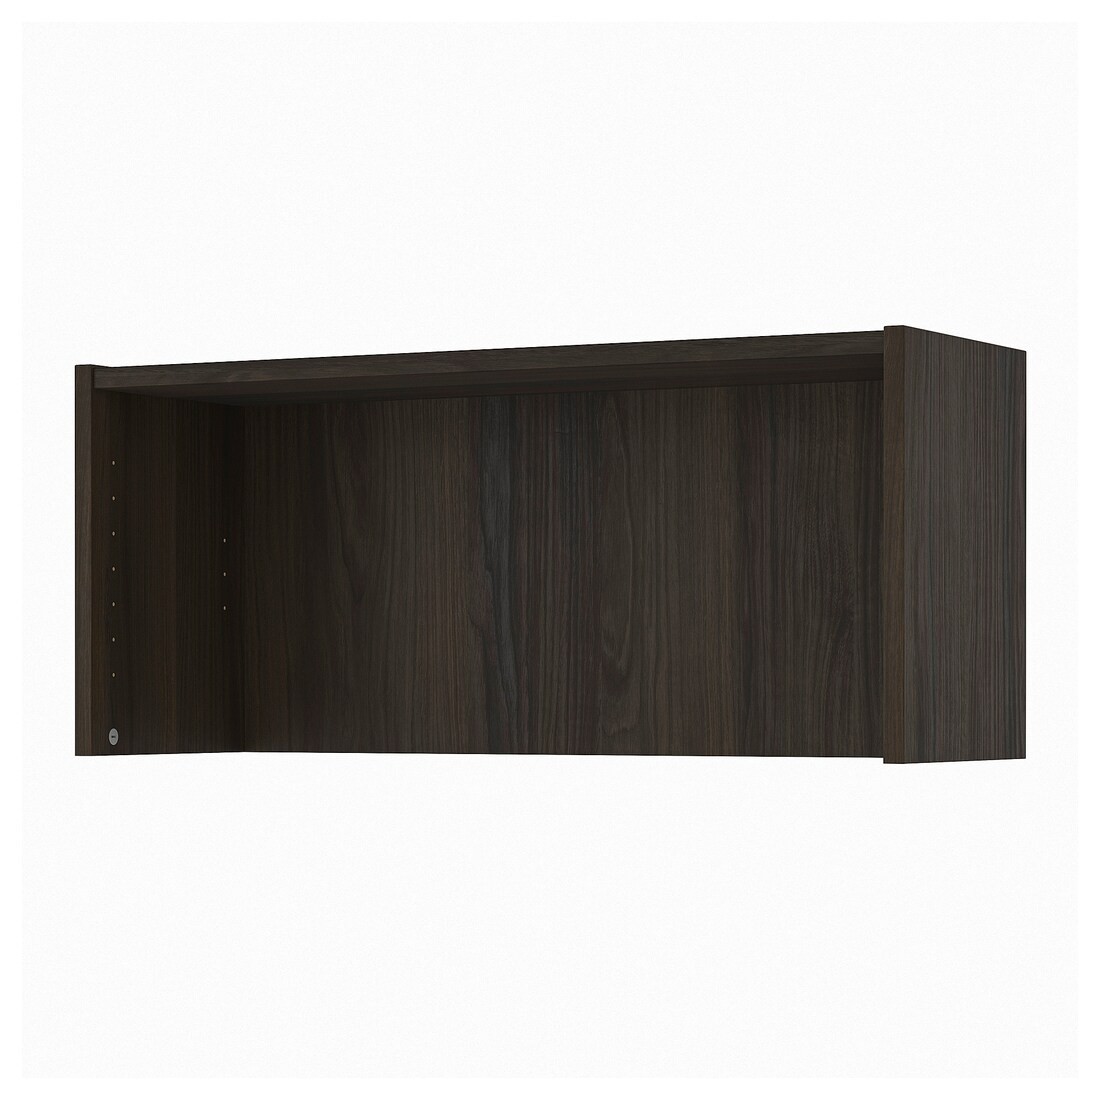 IKEA BILLY Надставка, темно-коричневая имитация дуб, 80x28x35 см 10492832 104.928.32